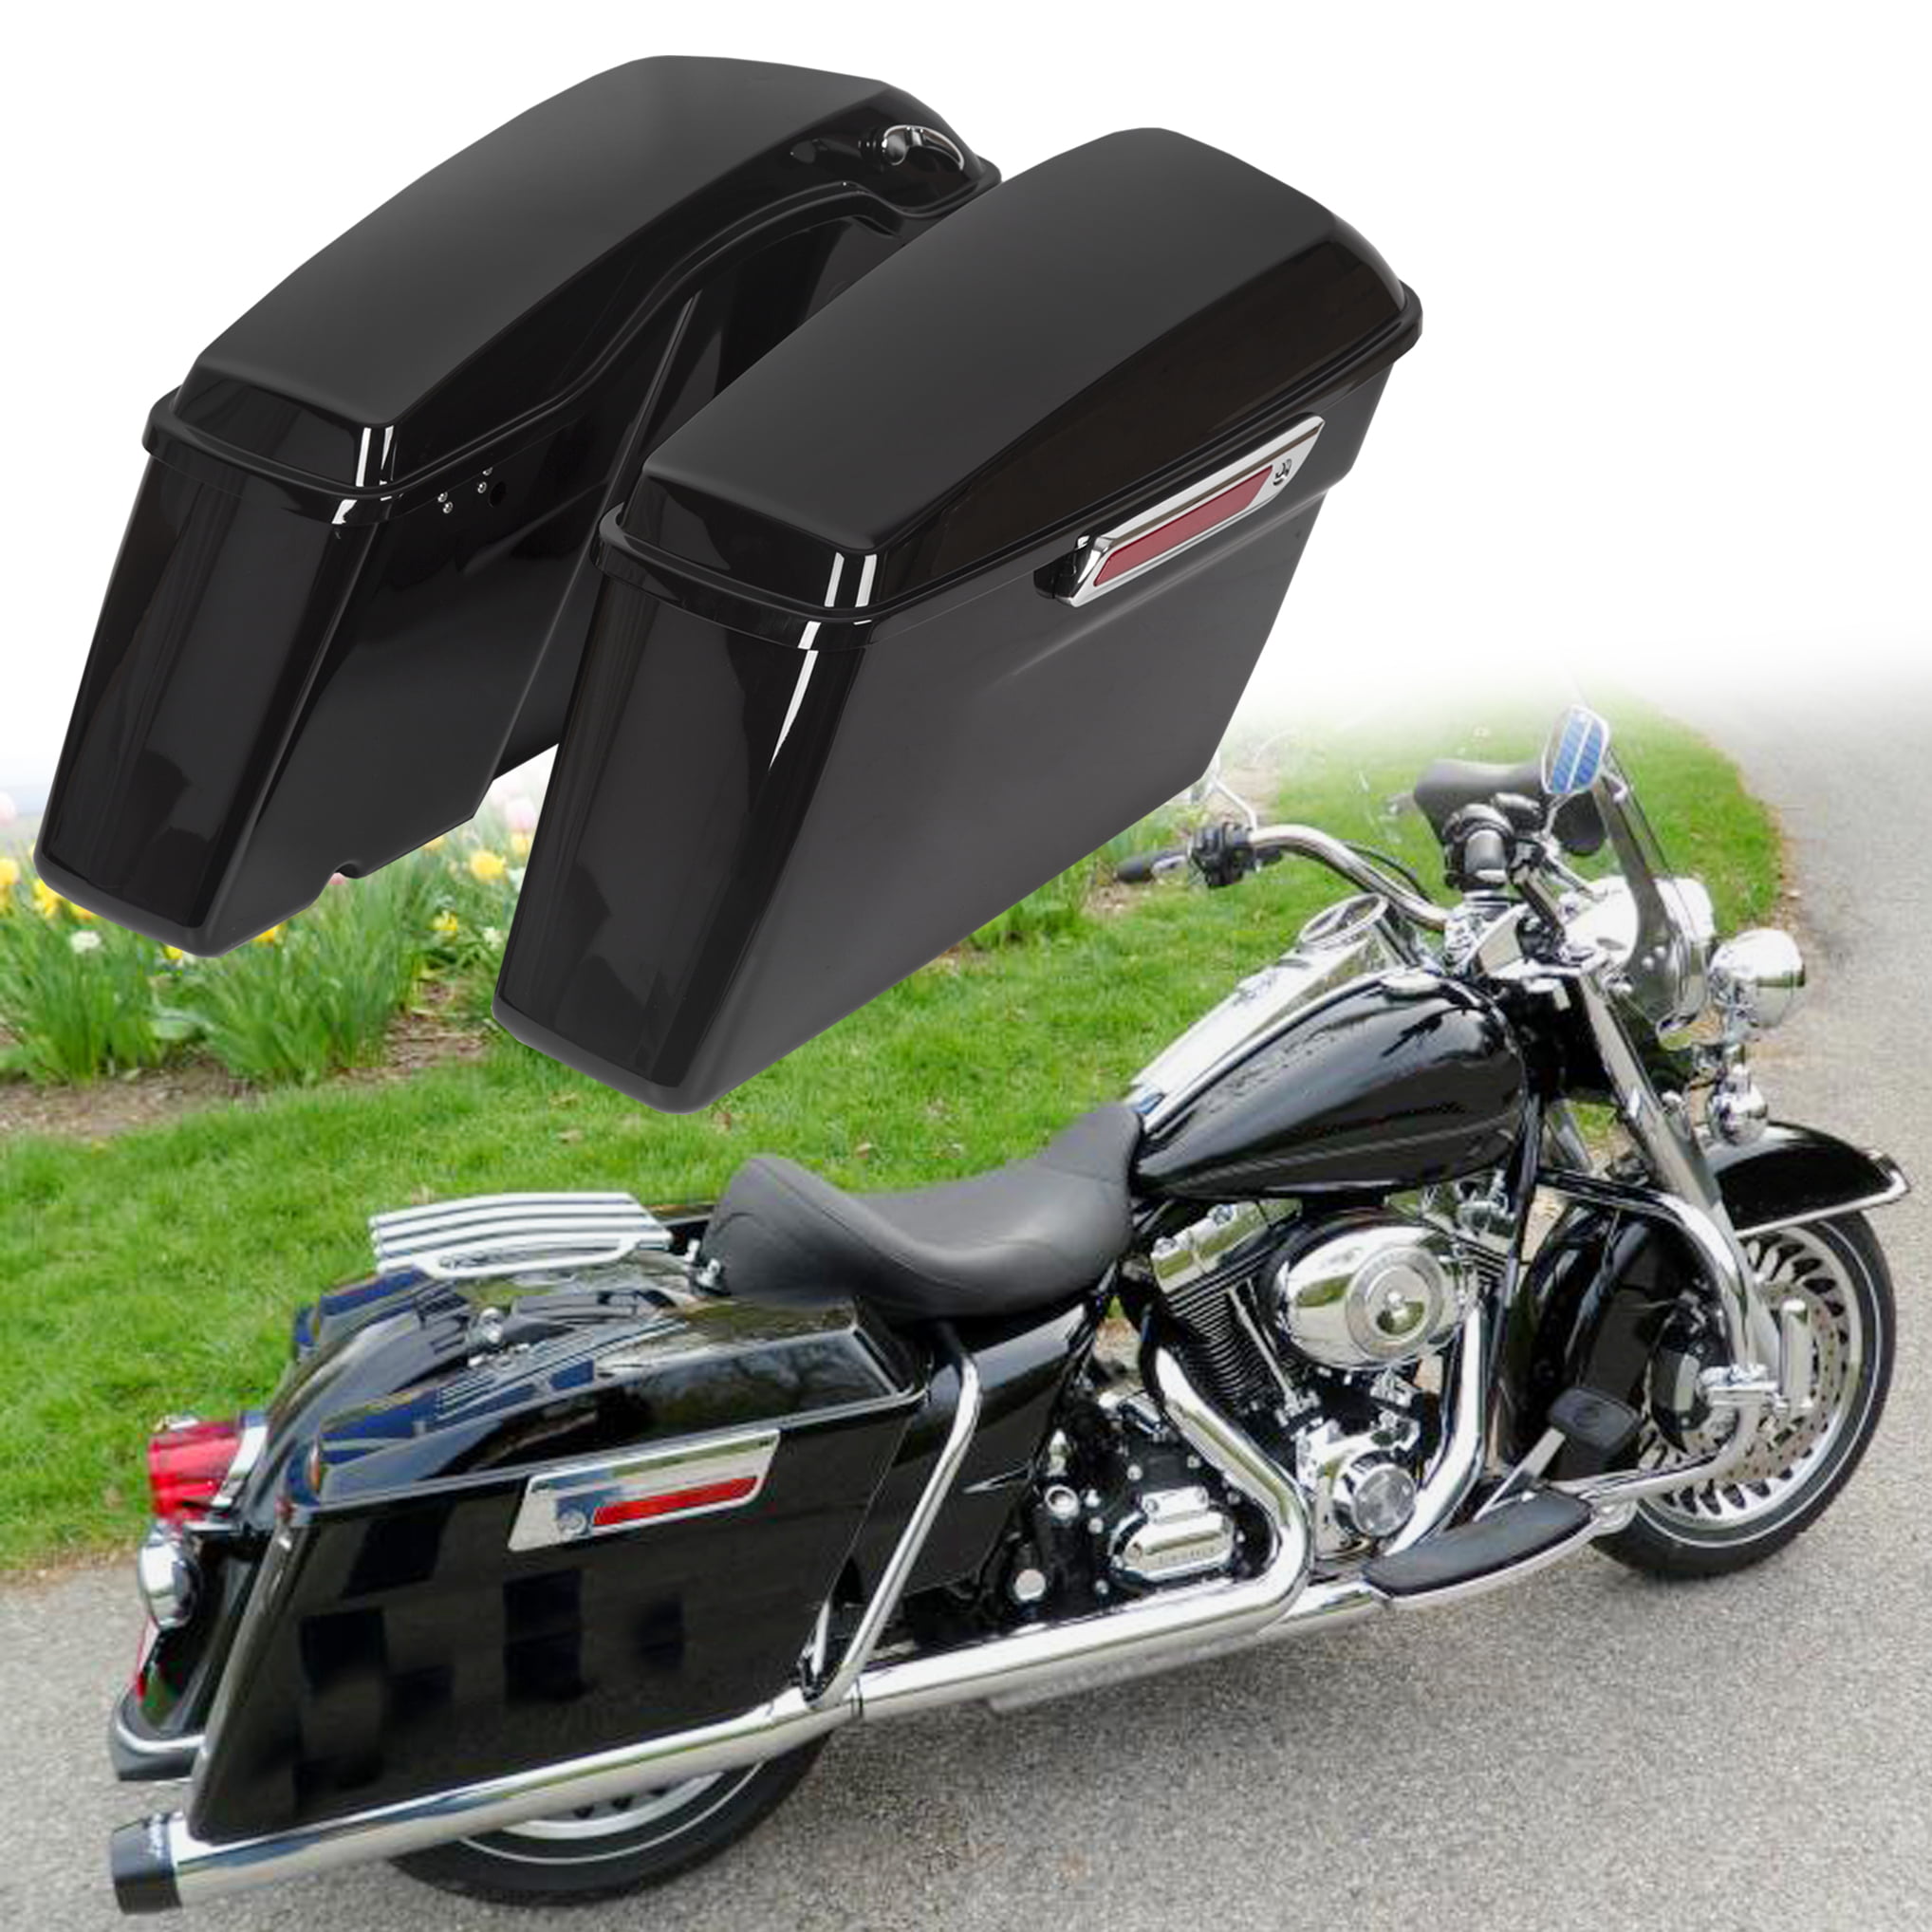 Black Hard Saddle Bags Motorcycle Luggage w/ Lights For Honda Cruiser Harley